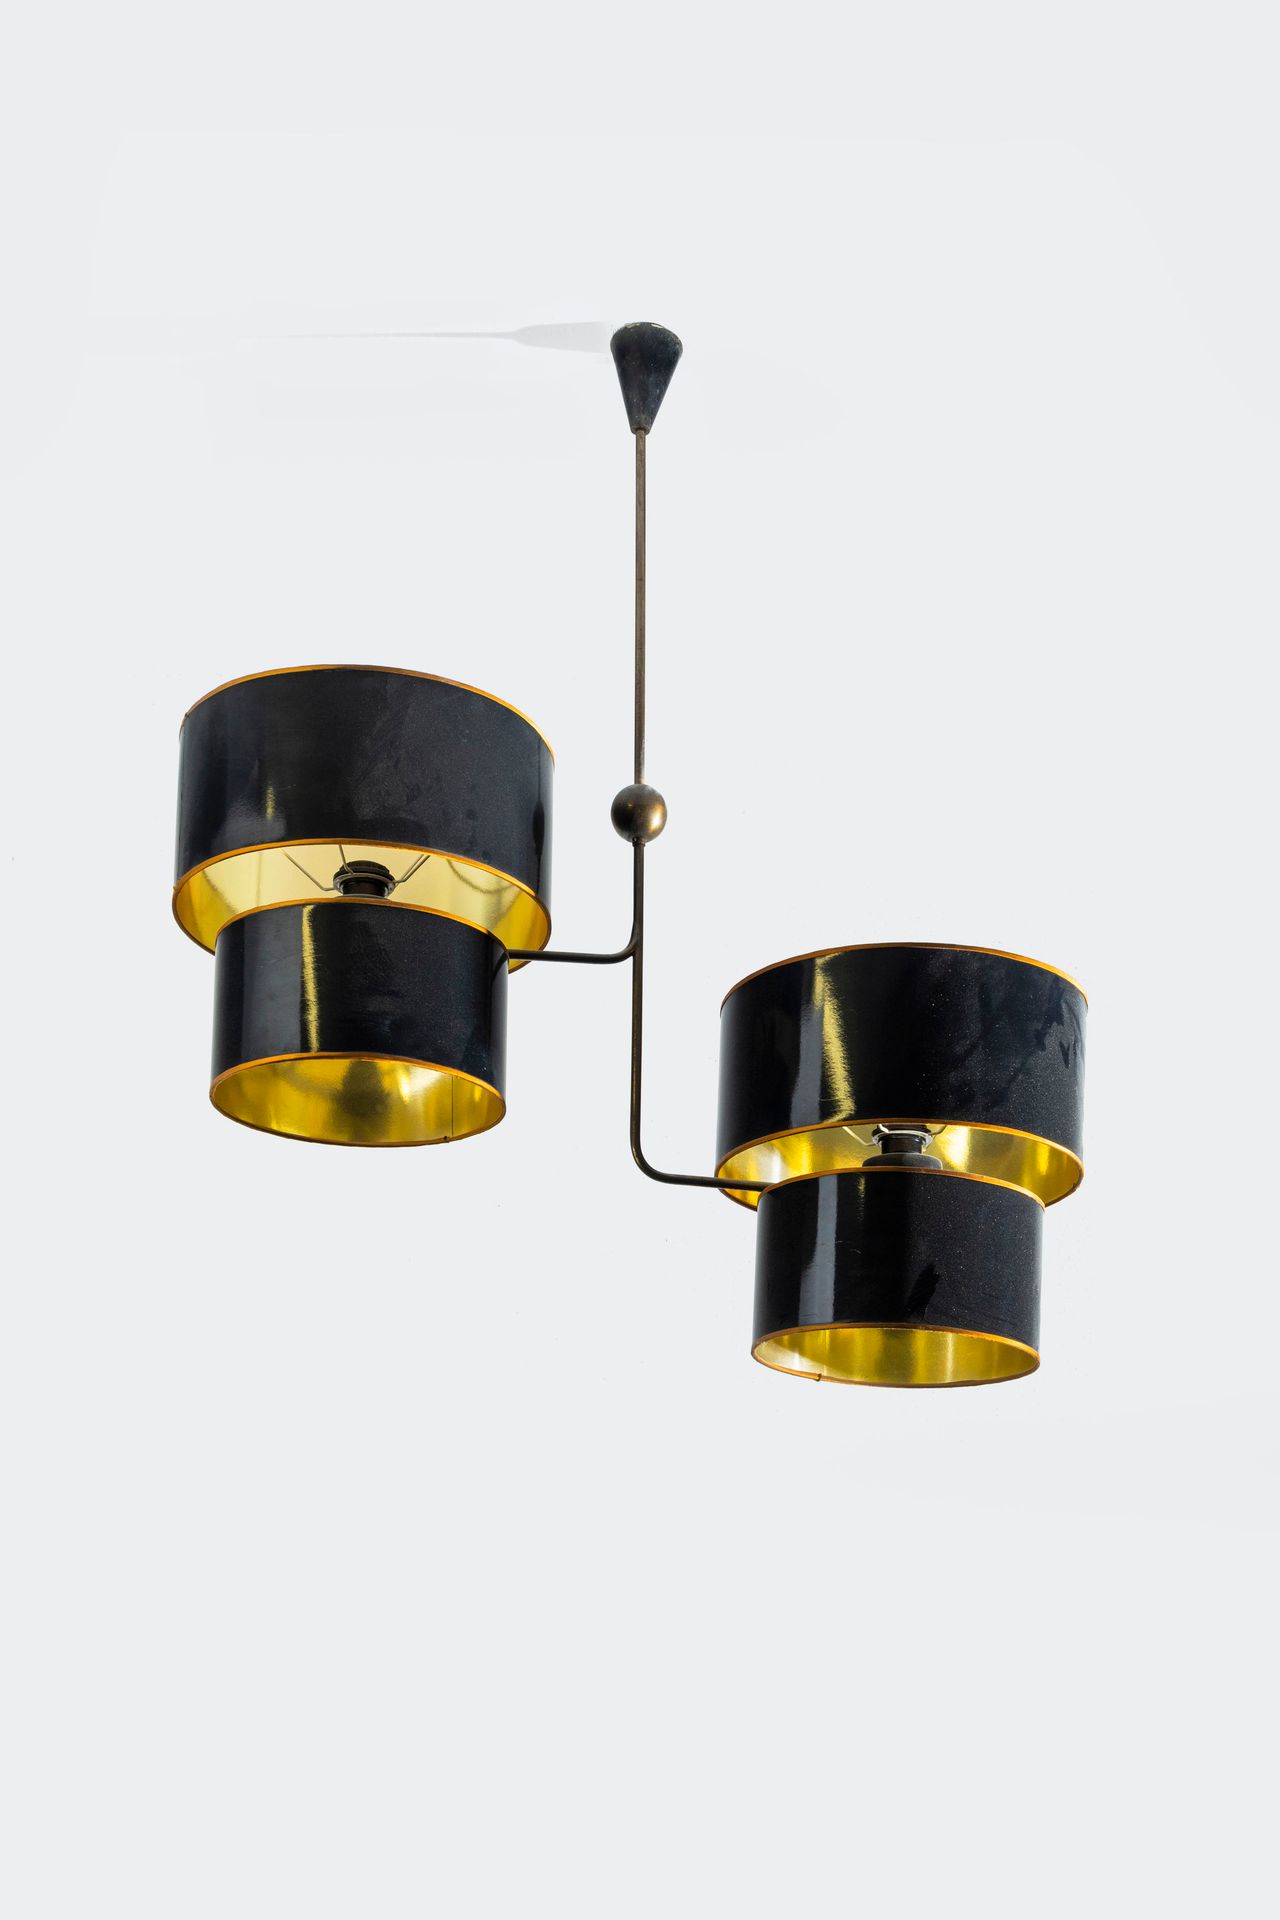 MANIFATTURA ITALIANA Pendant lamp. Brass. 1950s.
102x88x35 cm.
AN ITALIAN CEILIN&hellip;